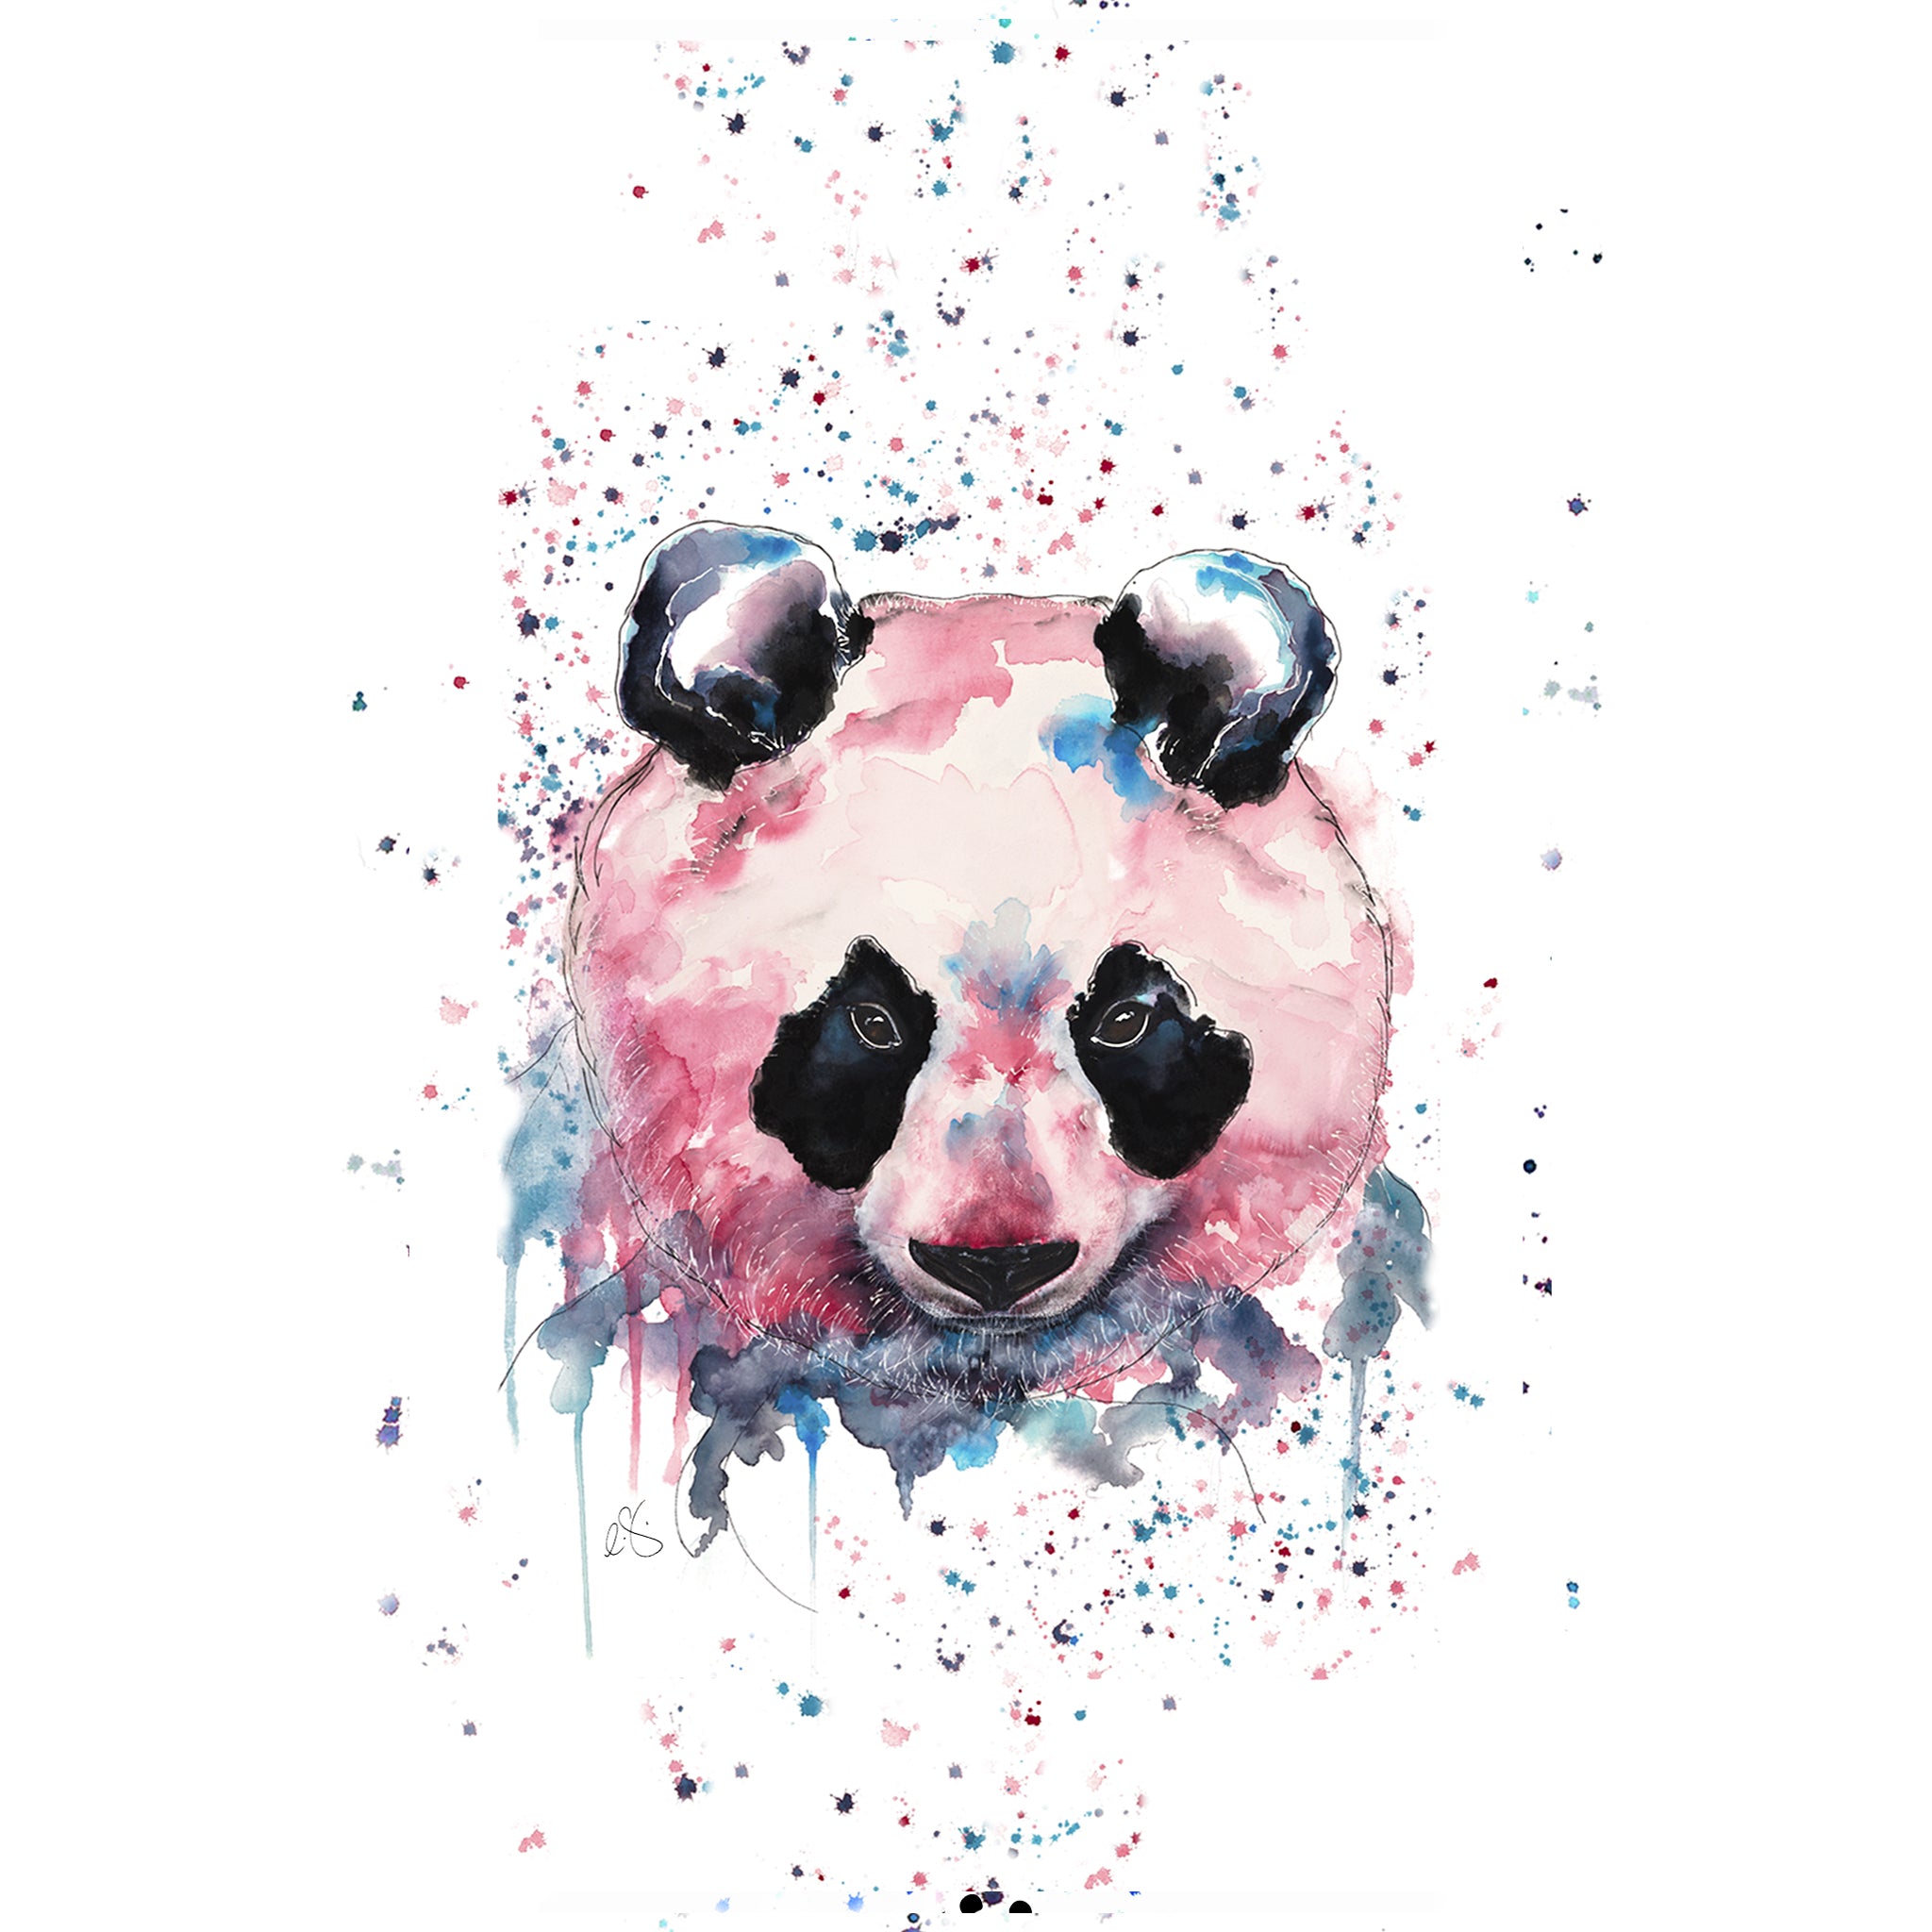 WWF Panda